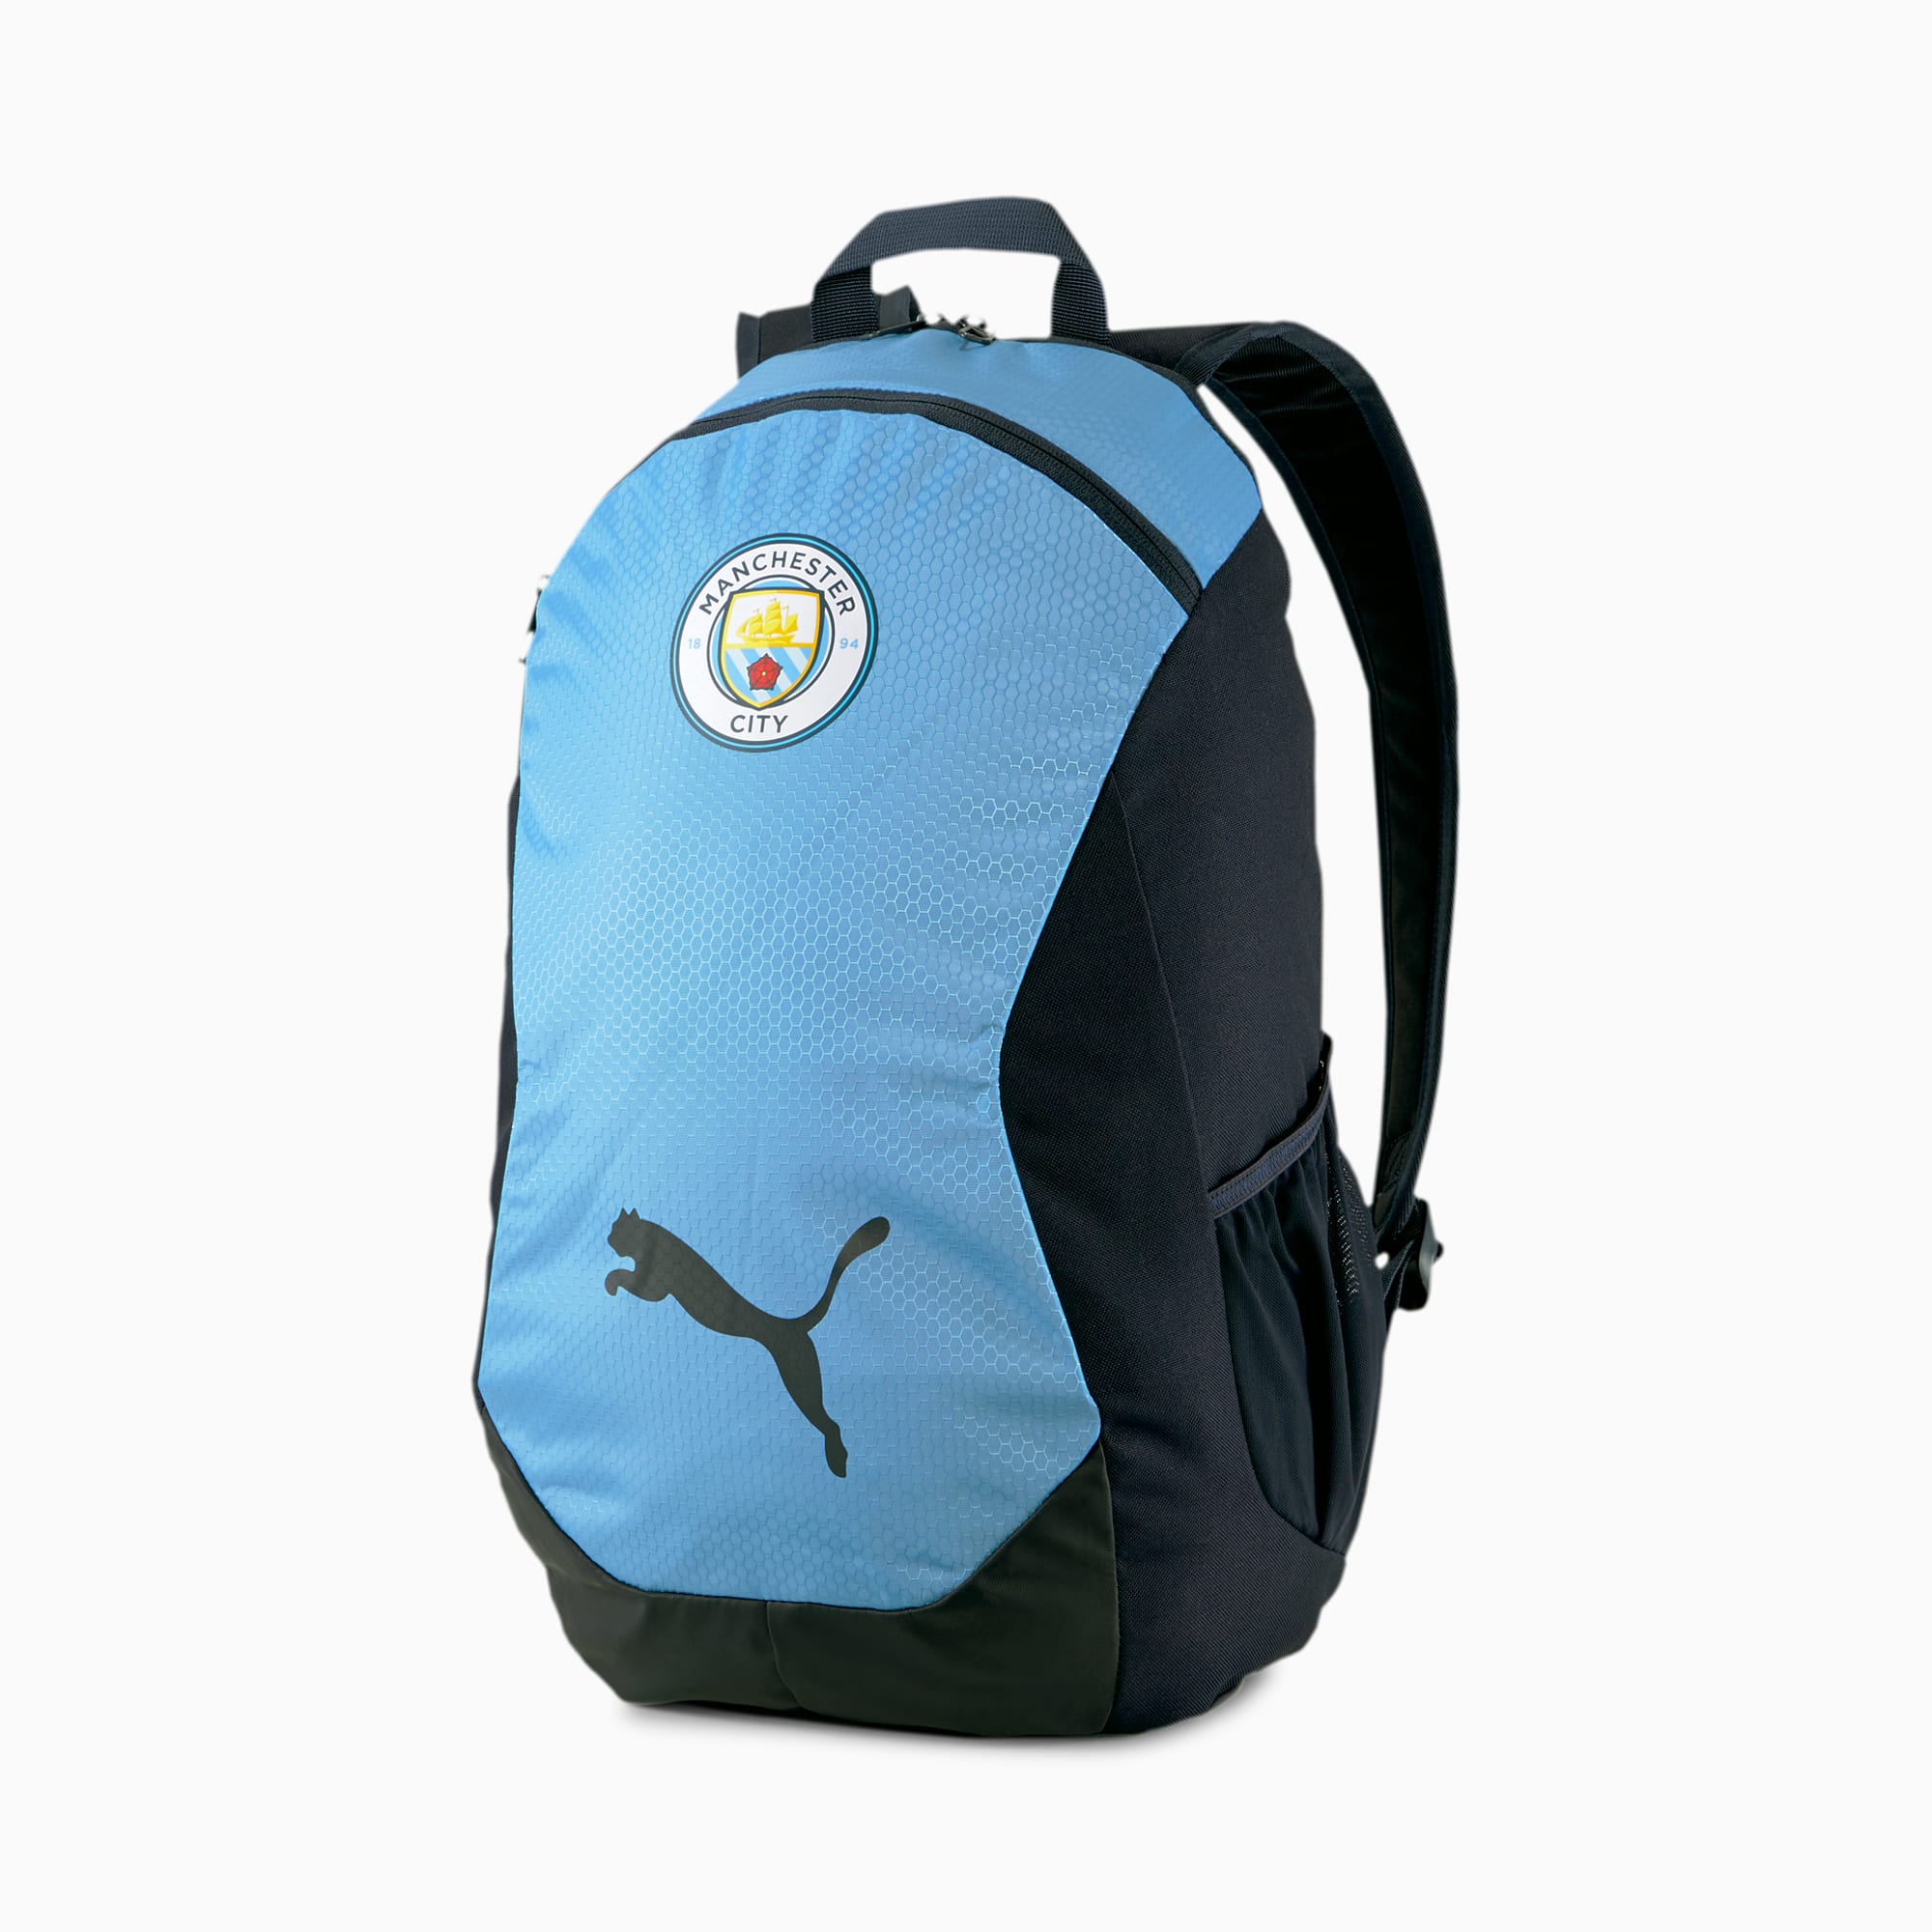 puma team backpack